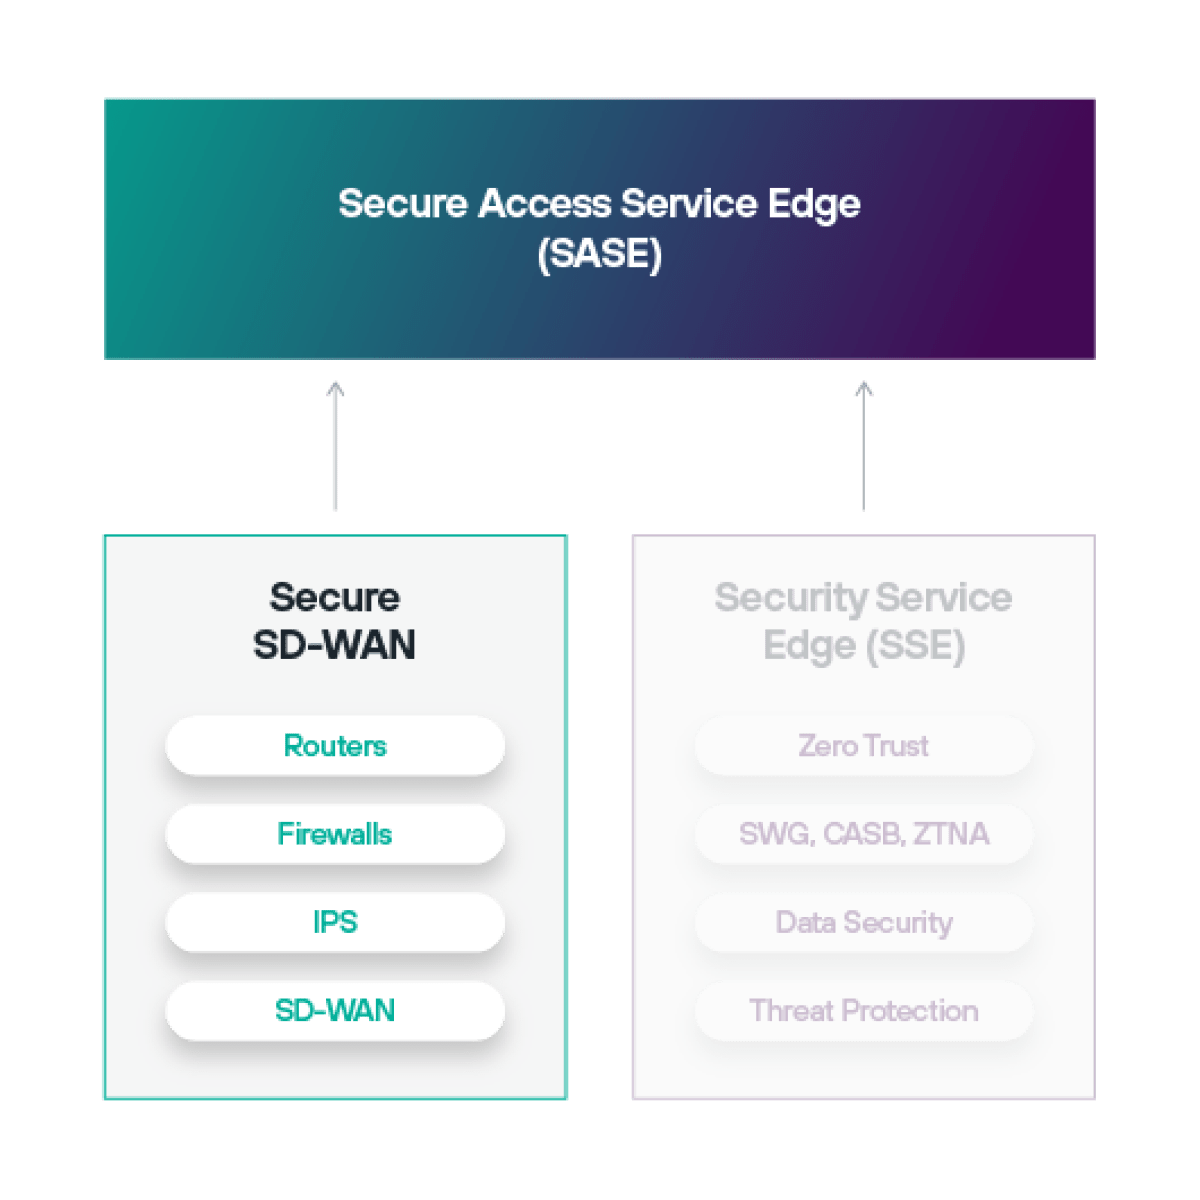 Software-Defined Wide Area Networking (SD-WAN) son parte de la arquitectura de Secure Access Service Edge (SASE).